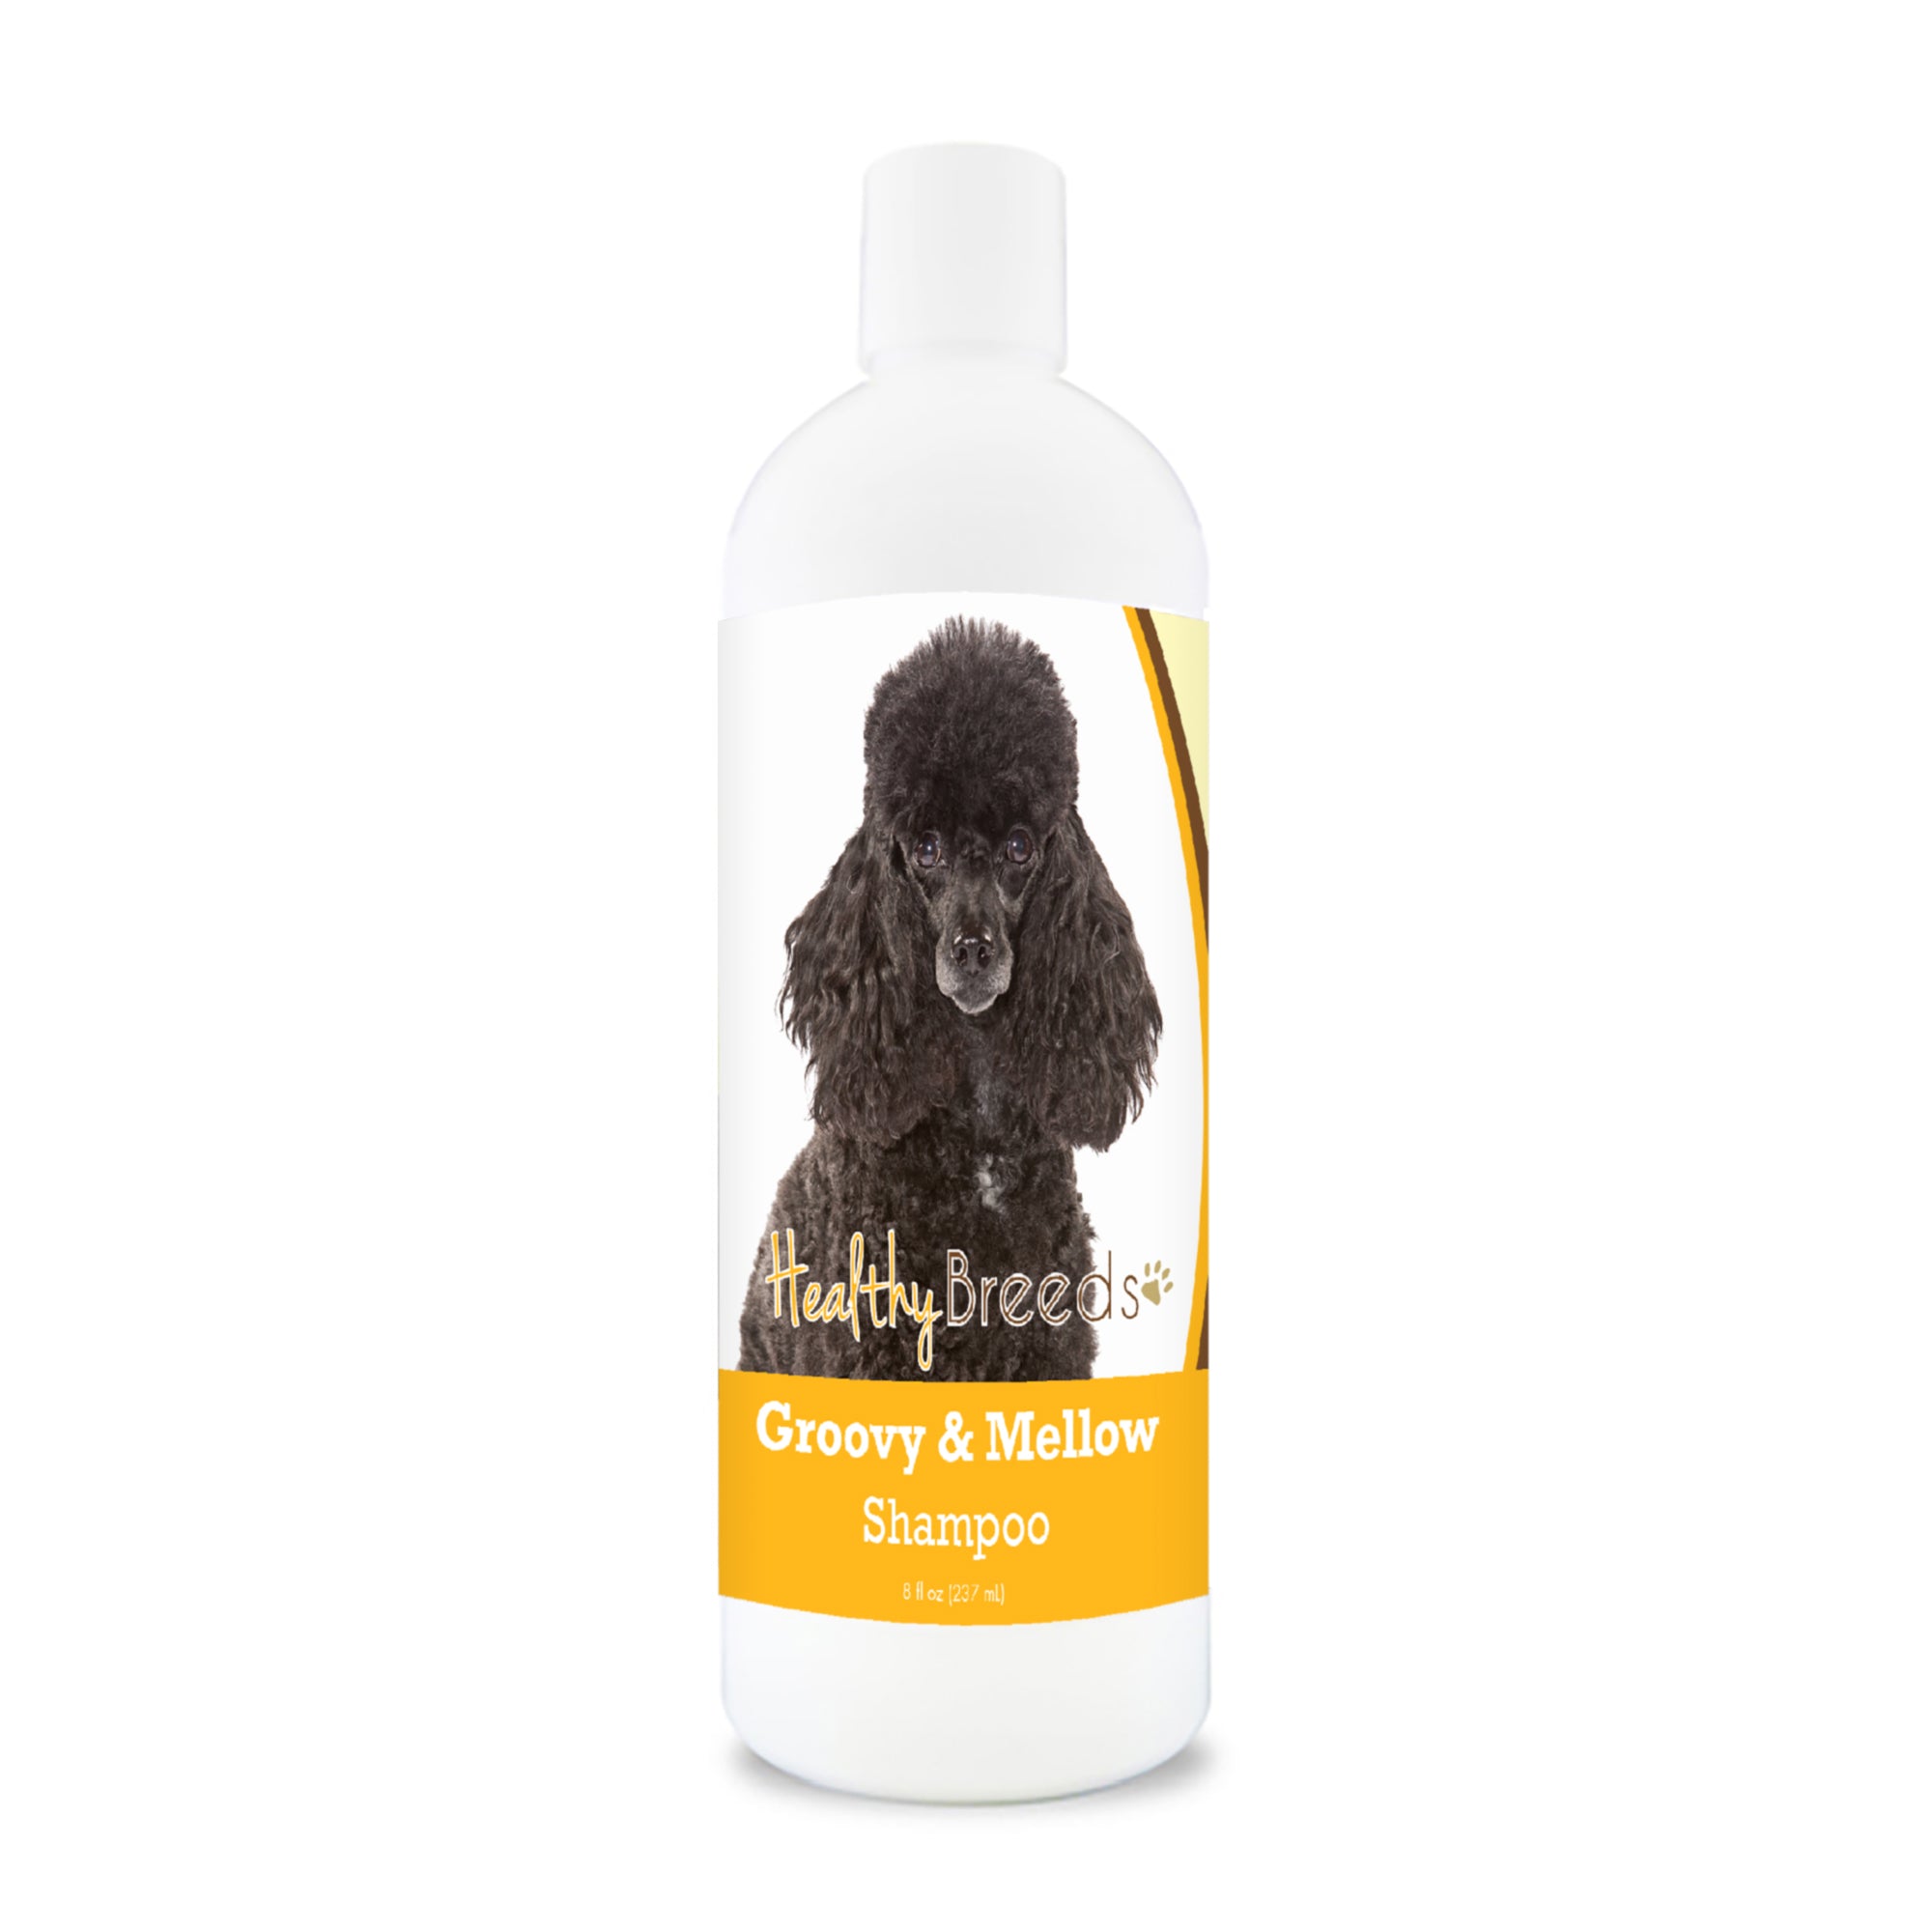 Poodle Groovy & Mellow Shampoo 8 oz